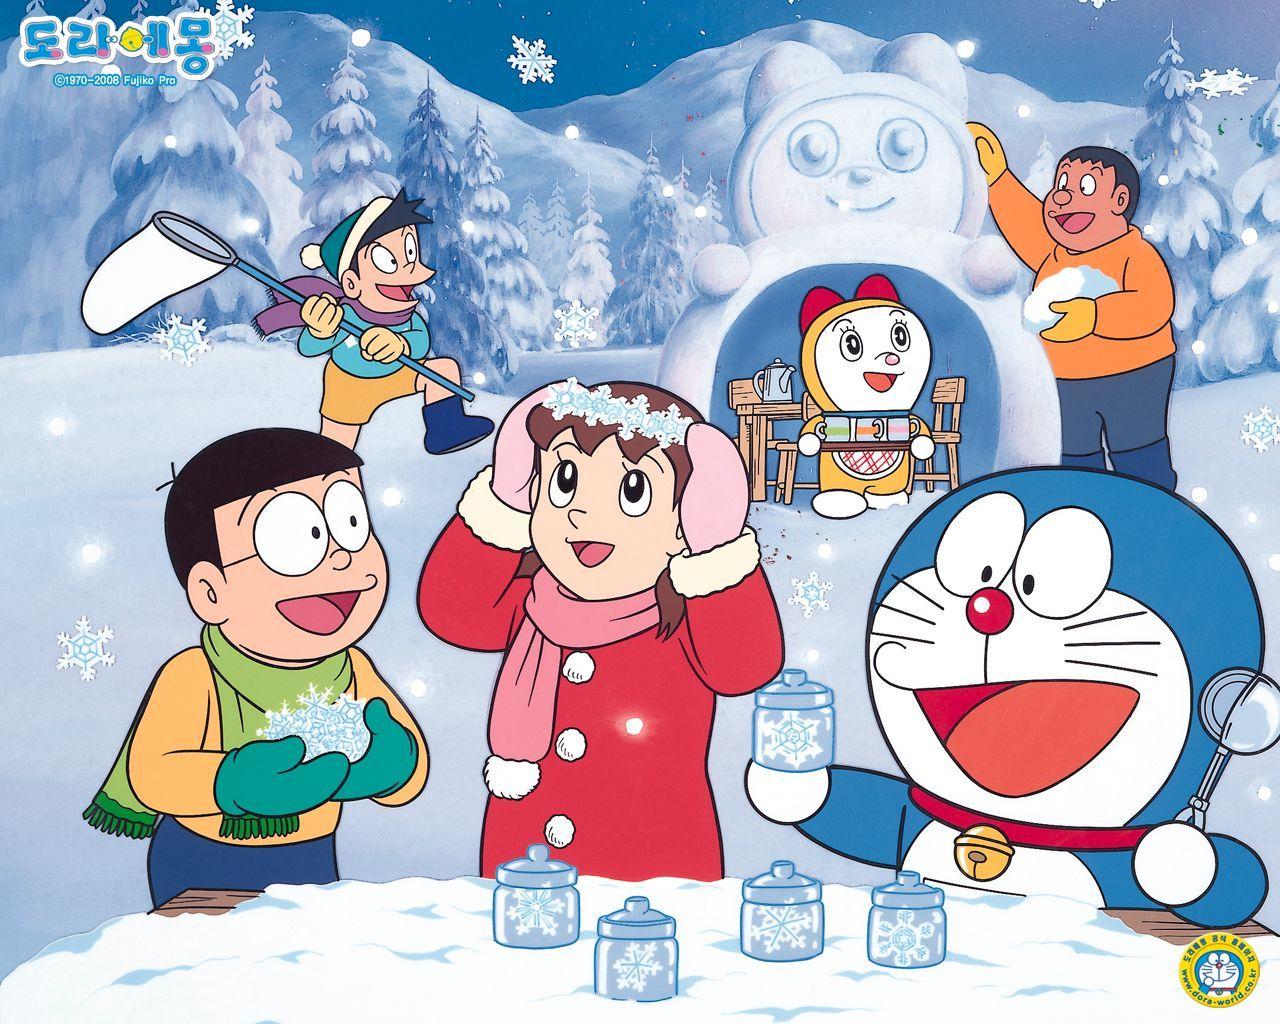 Doraemon Wallpaper 31. Free HD Wallpaper Desktop. doraemon in 2019